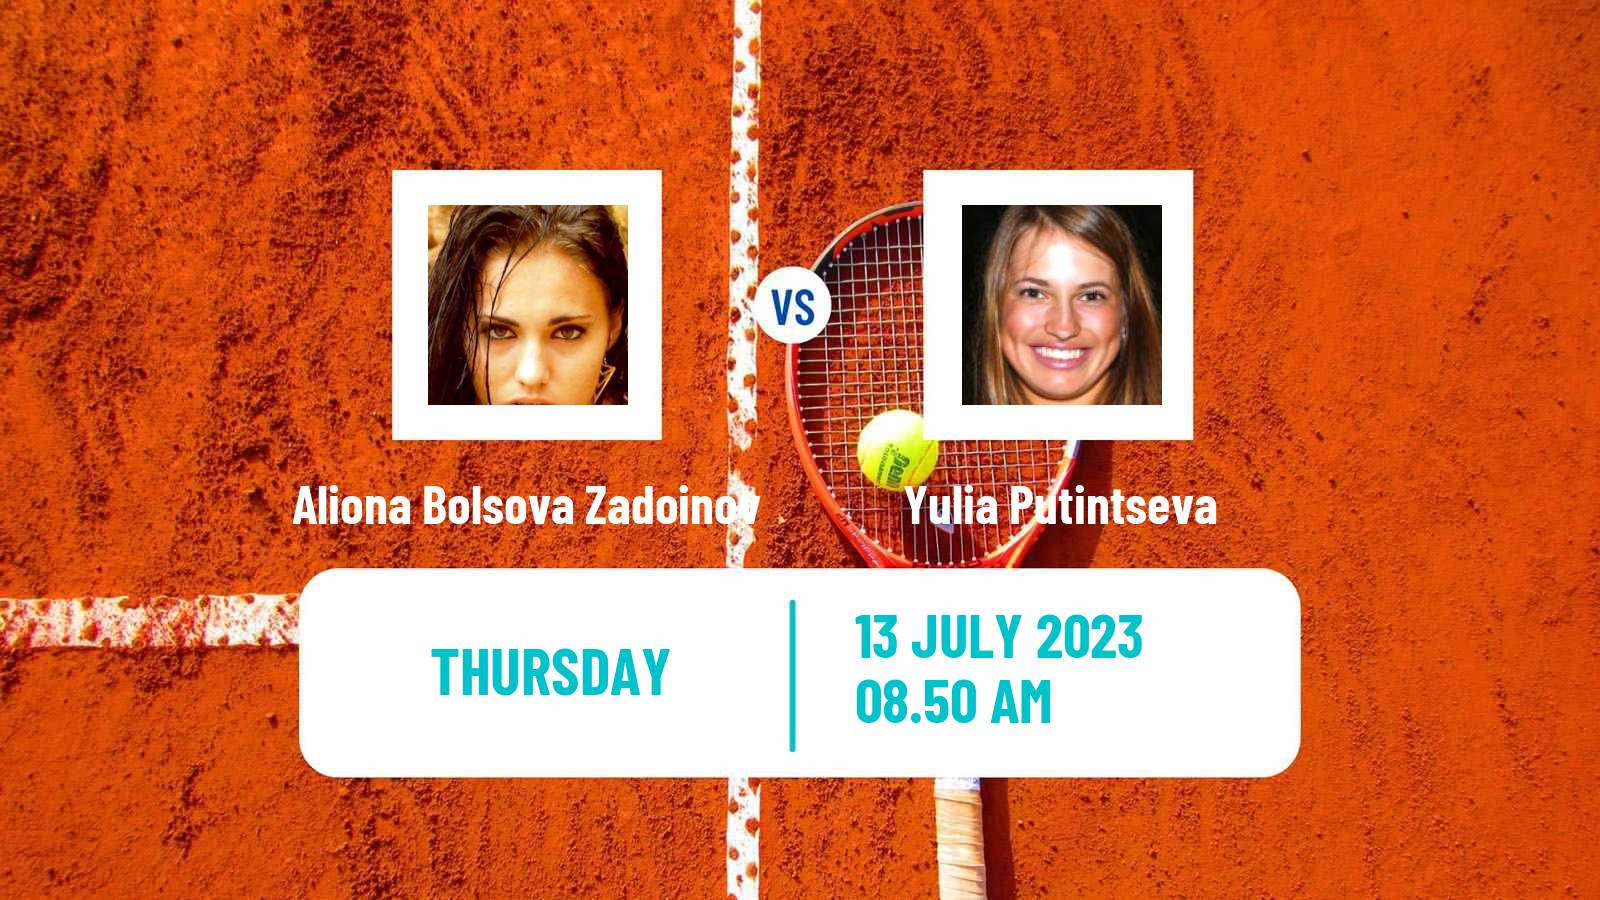 Tennis Bastad Challenger Women Aliona Bolsova Zadoinov - Yulia Putintseva